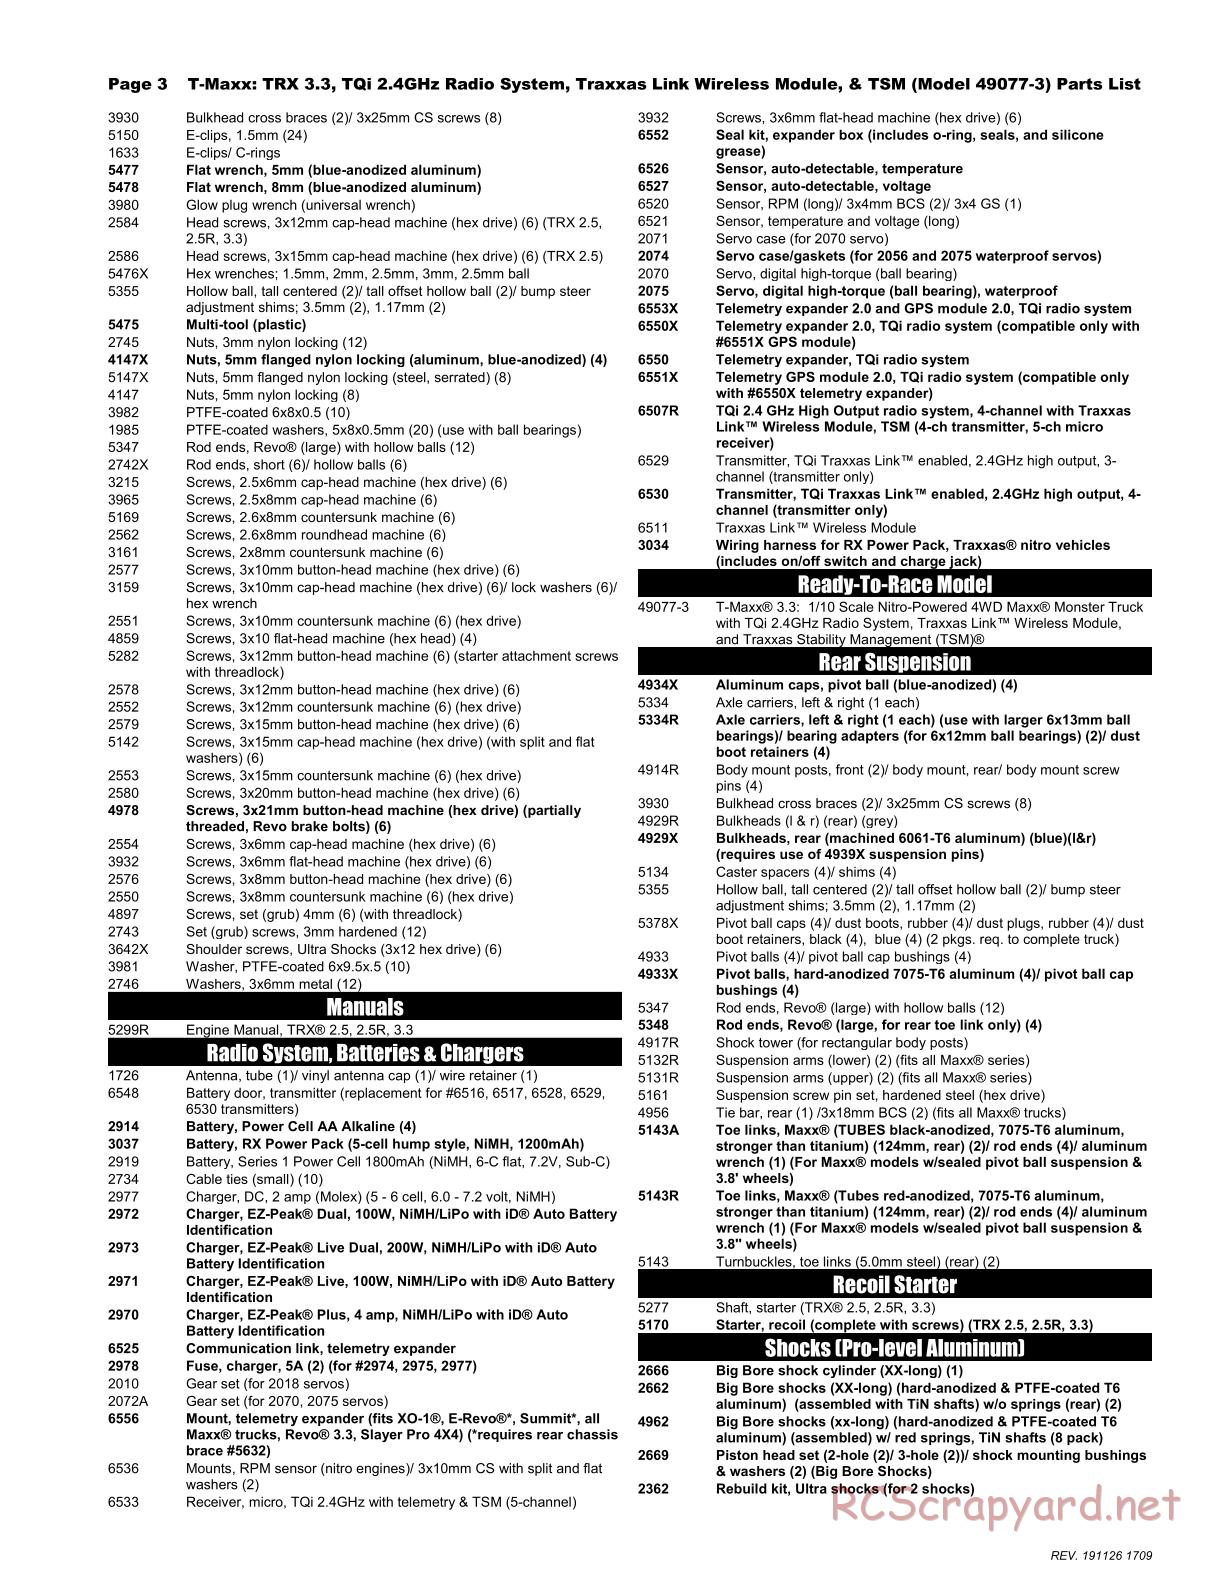 Traxxas - T-Maxx 3.3 TSM - Parts List - Page 3